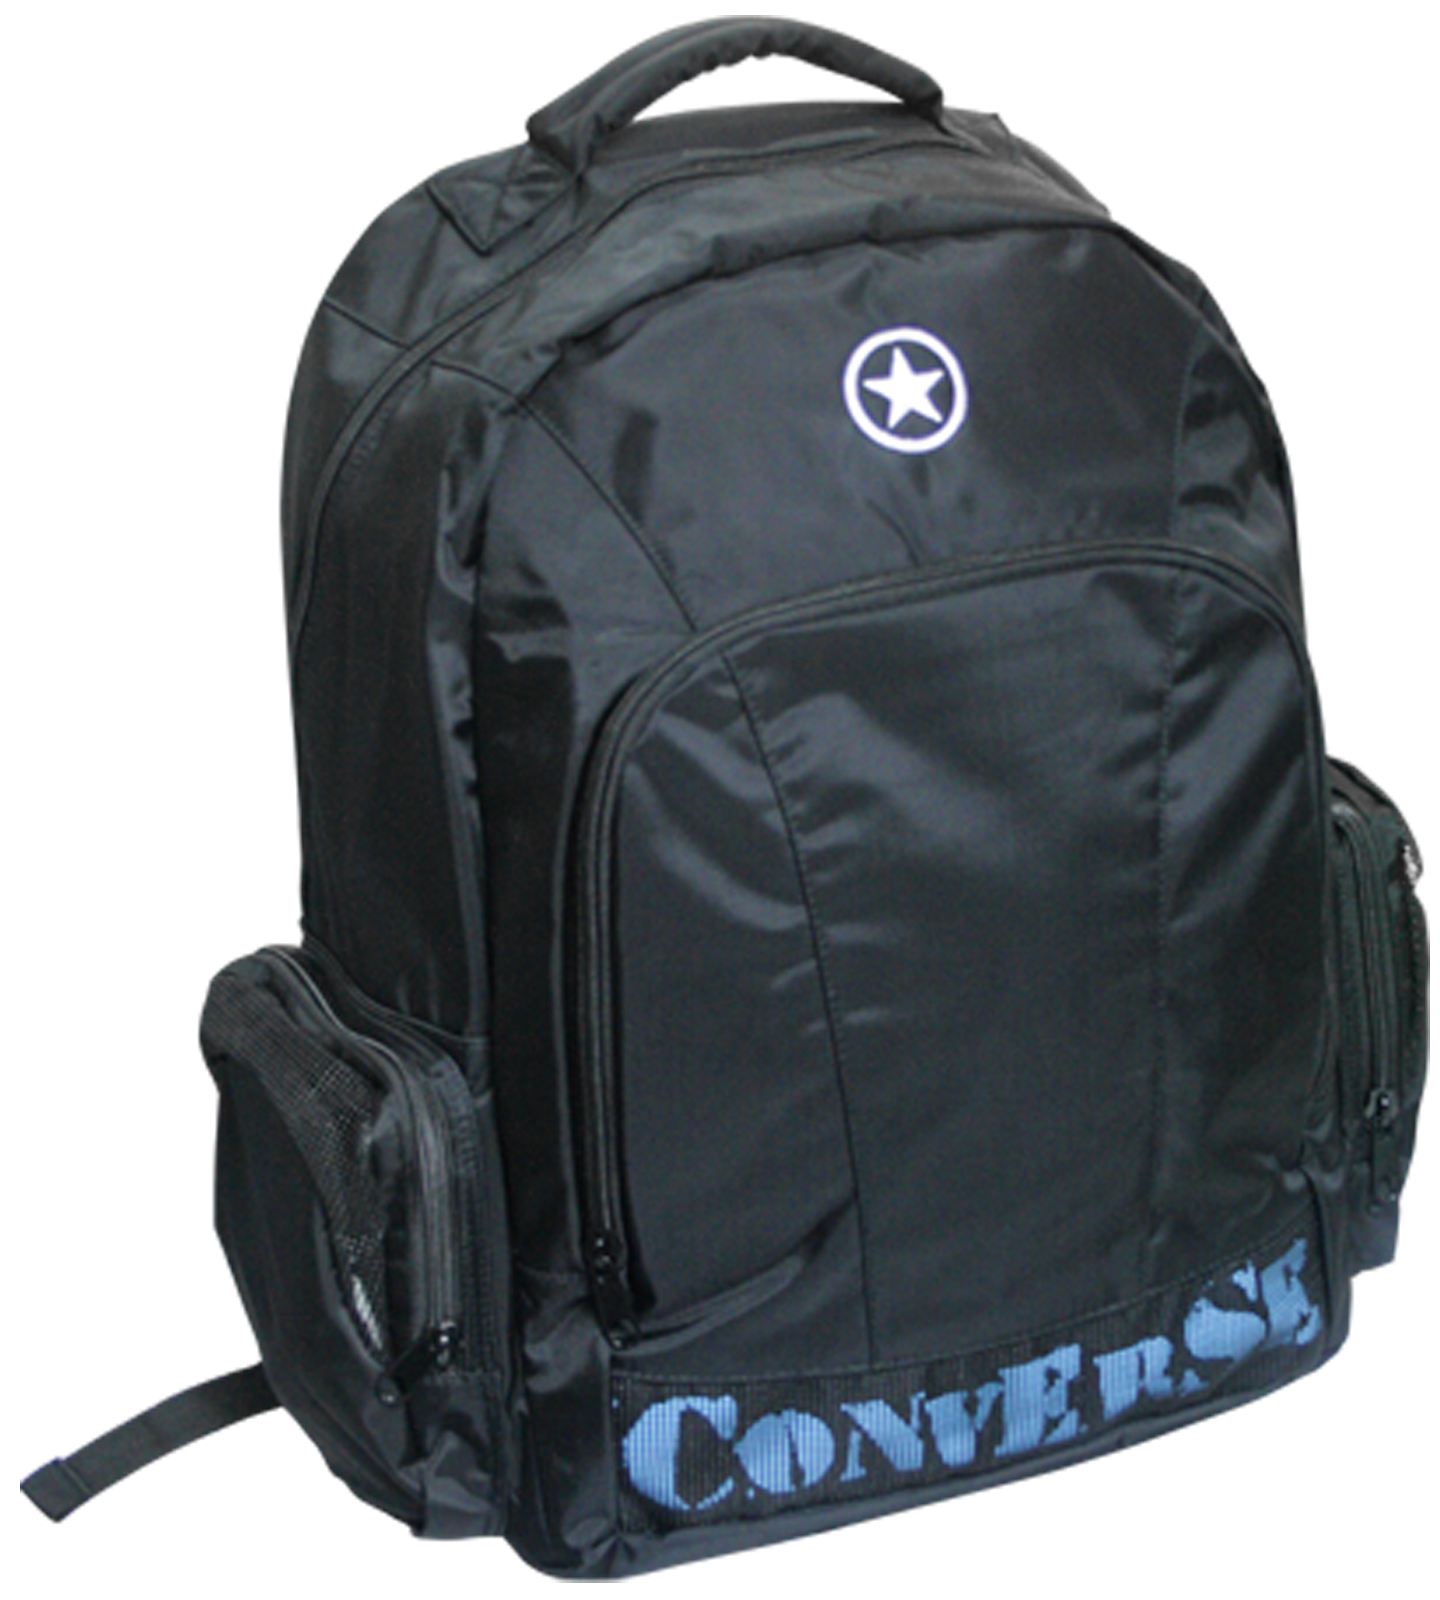 Converse Black Backpack PNG Image